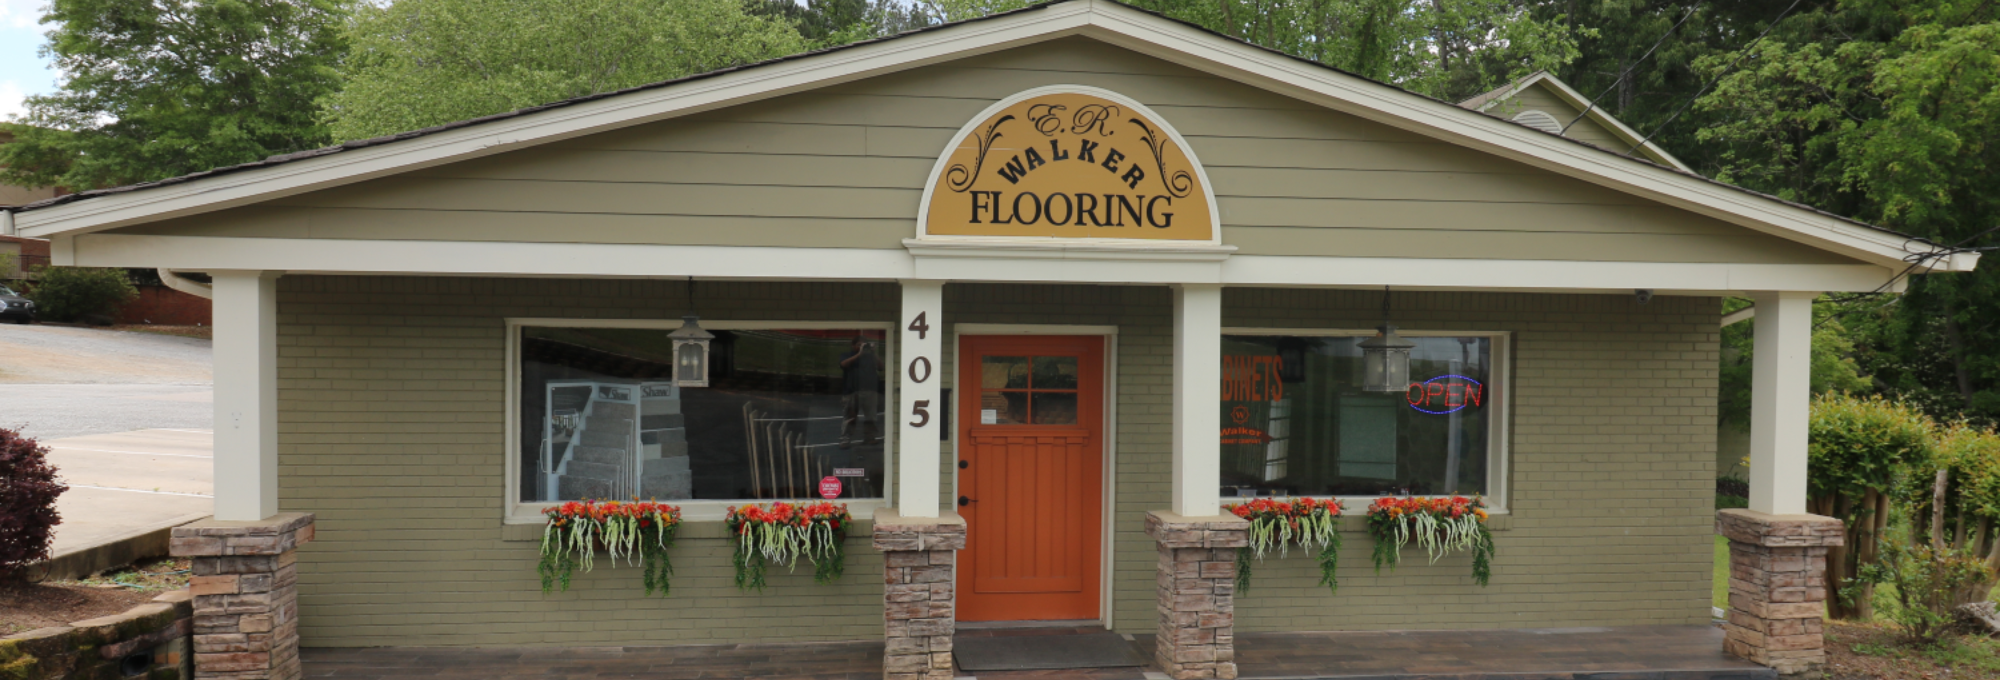 er walker flooring store front from Er Walker Flooring Specialists in Fayetteville, GA